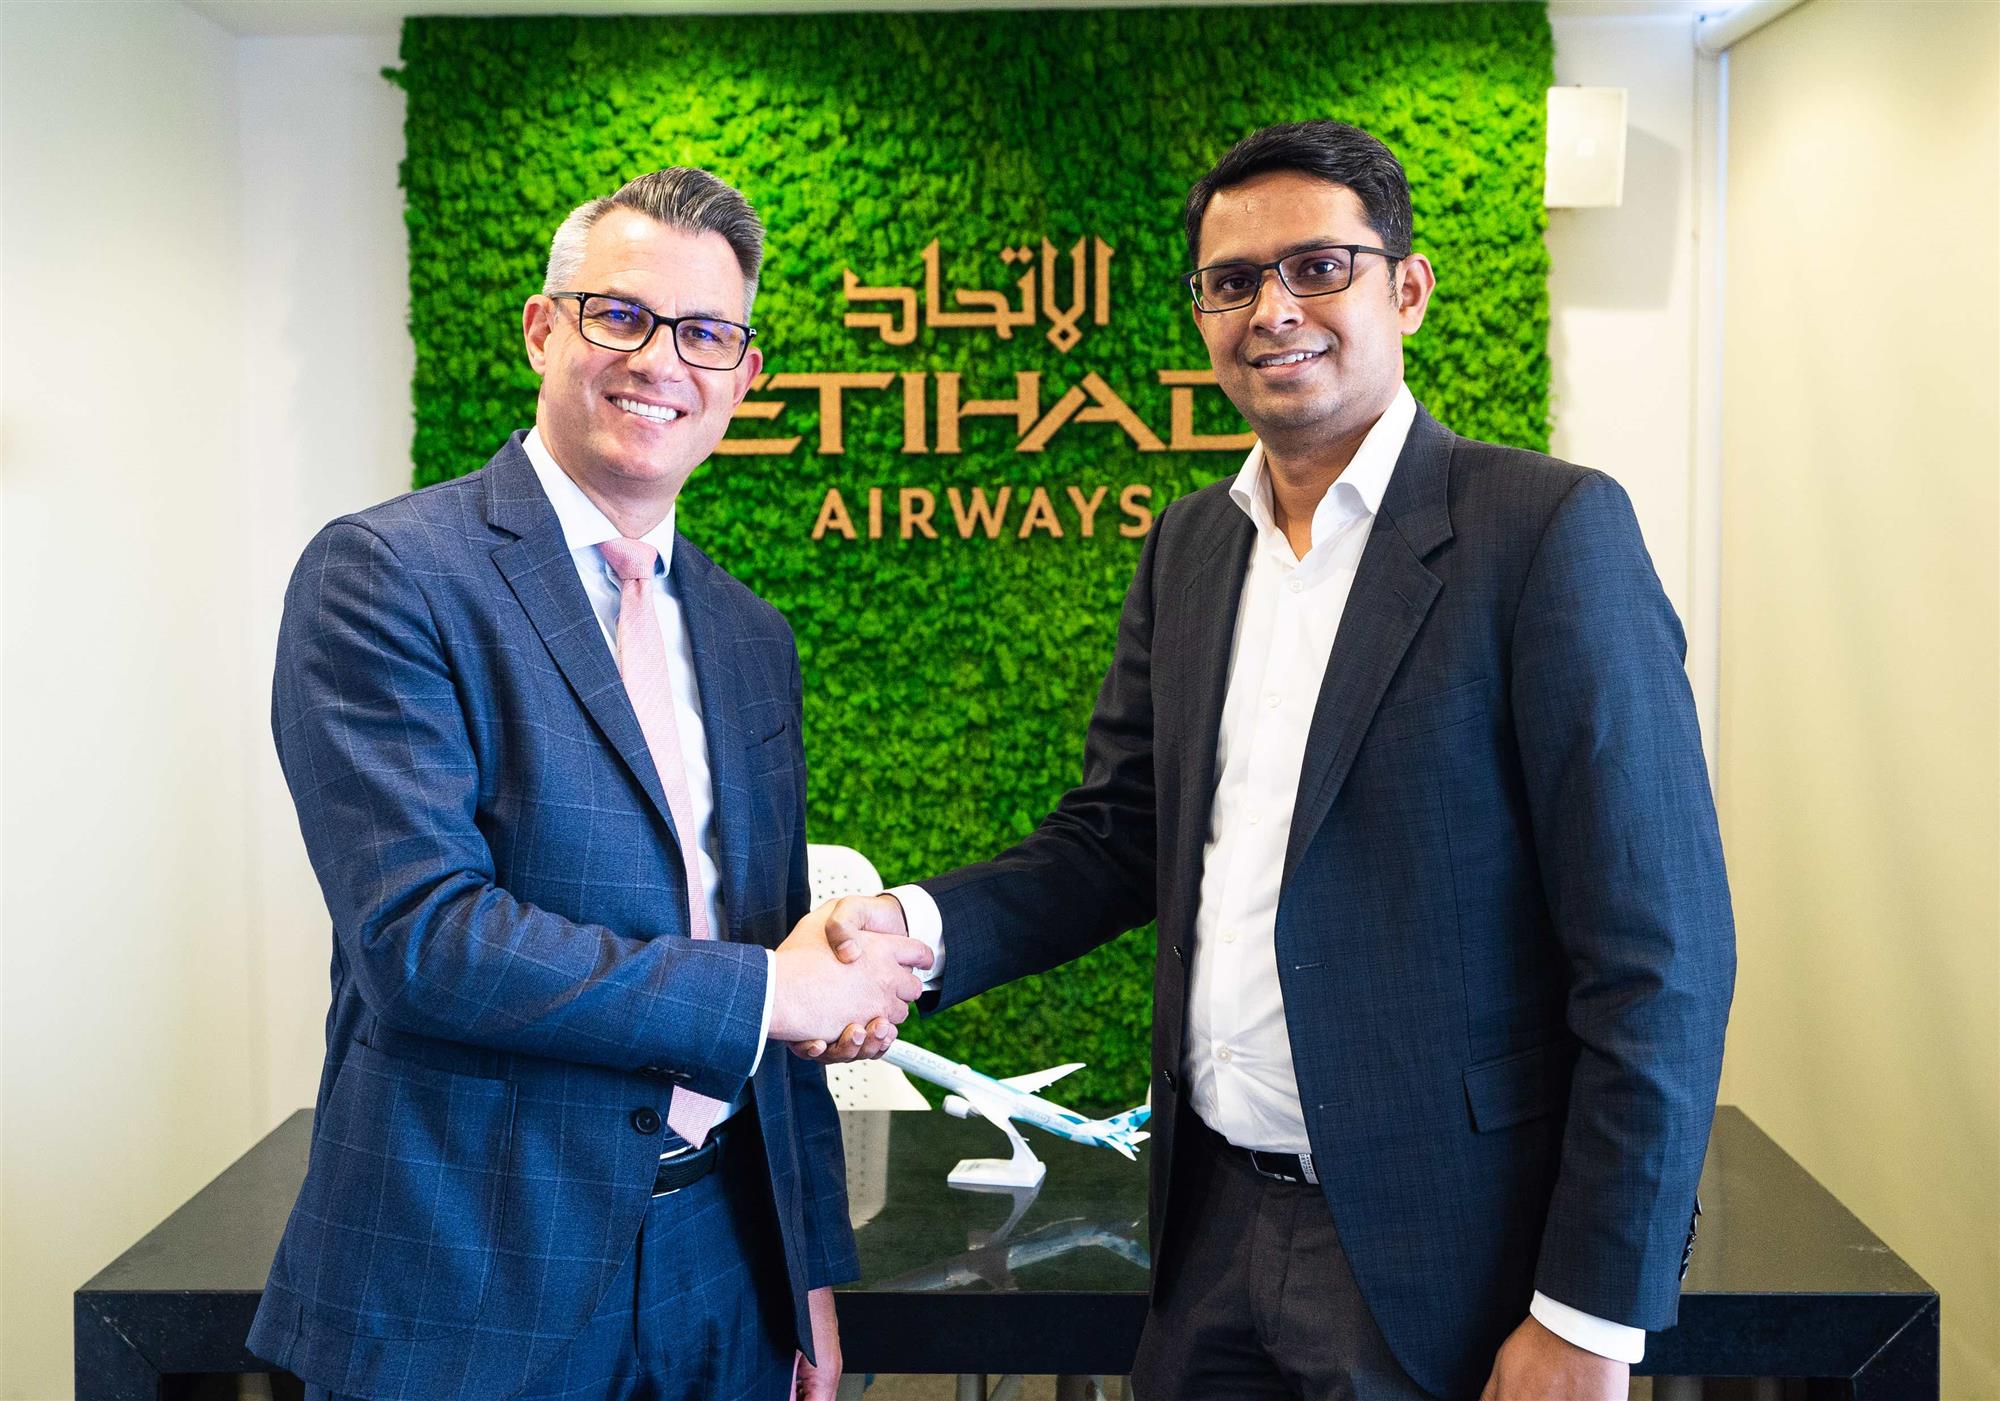 Self Photos / Files - Martin Drew at Etihad Aviation Group and Dr Suraj Nair at SPEEDCARGO confirmed the agreement during Dubai Airshow